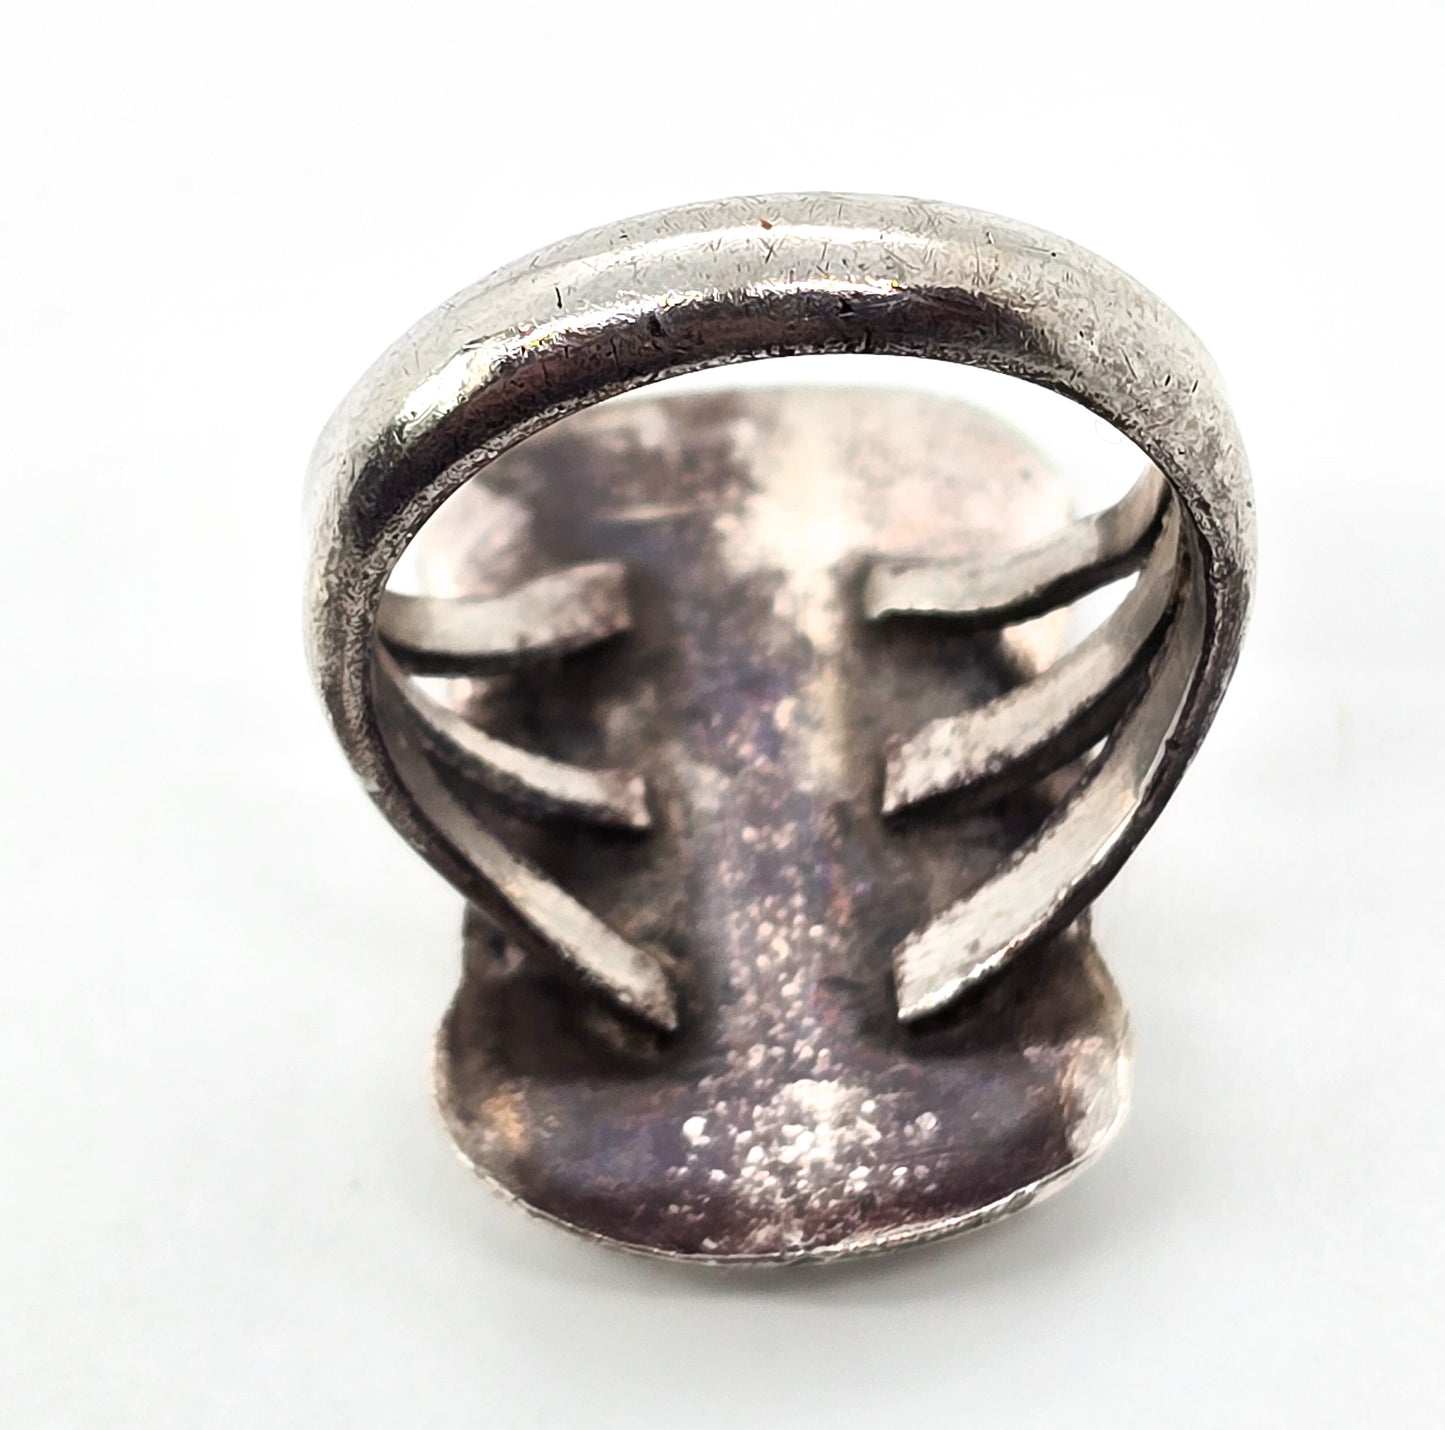 Slipper shell split shank Native American Three stone sterling silver ring size 7.5